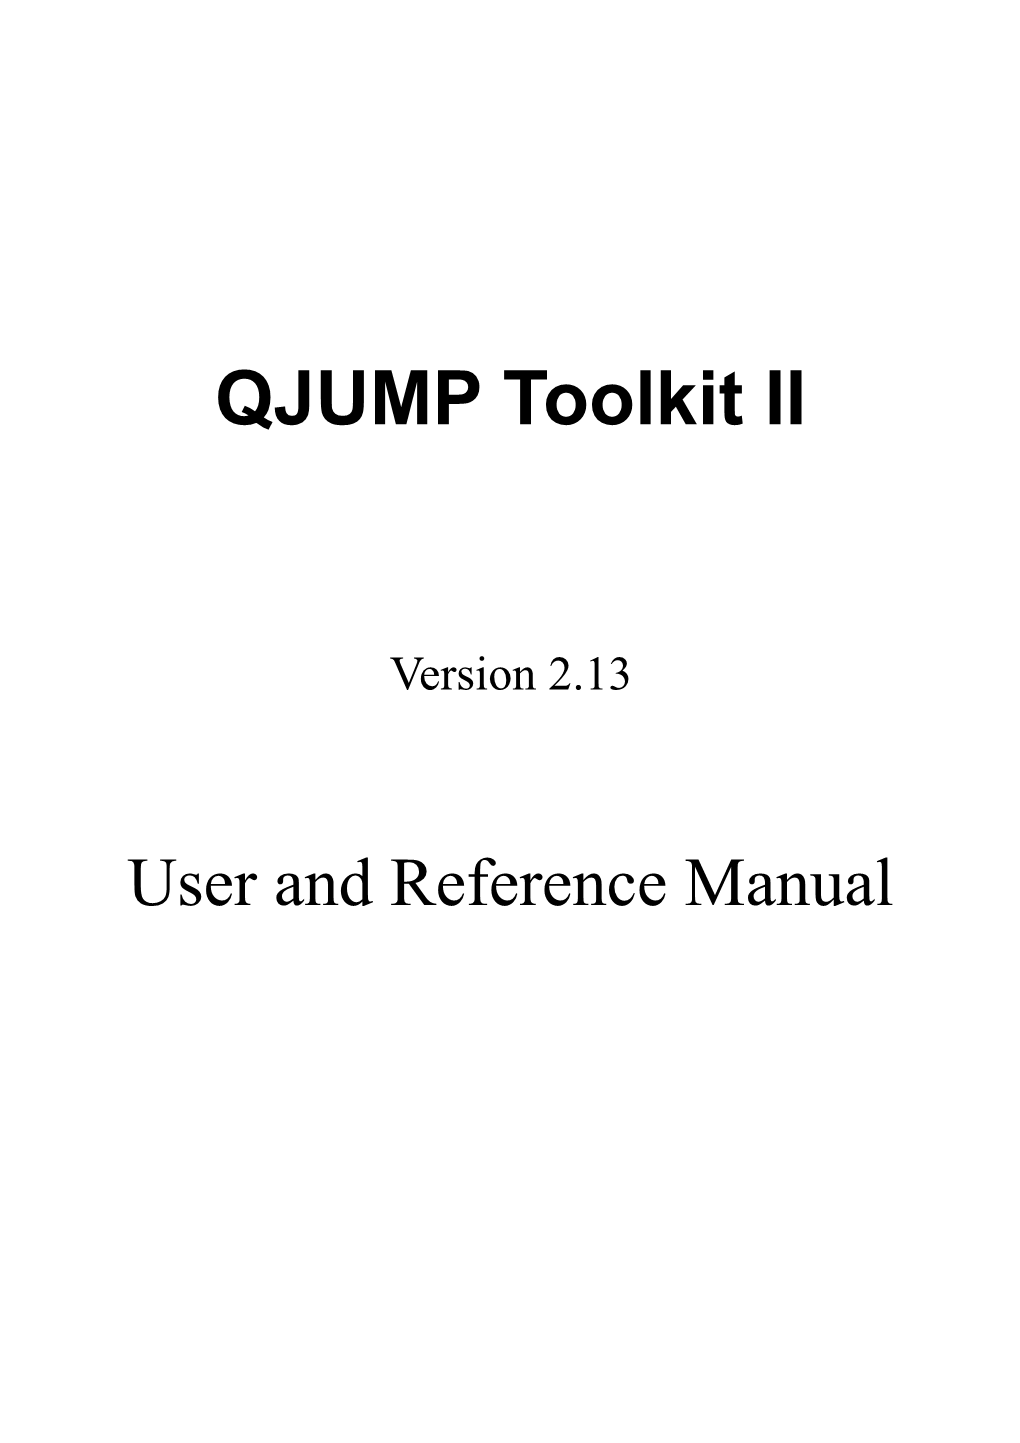 QJUMP Toolkit II